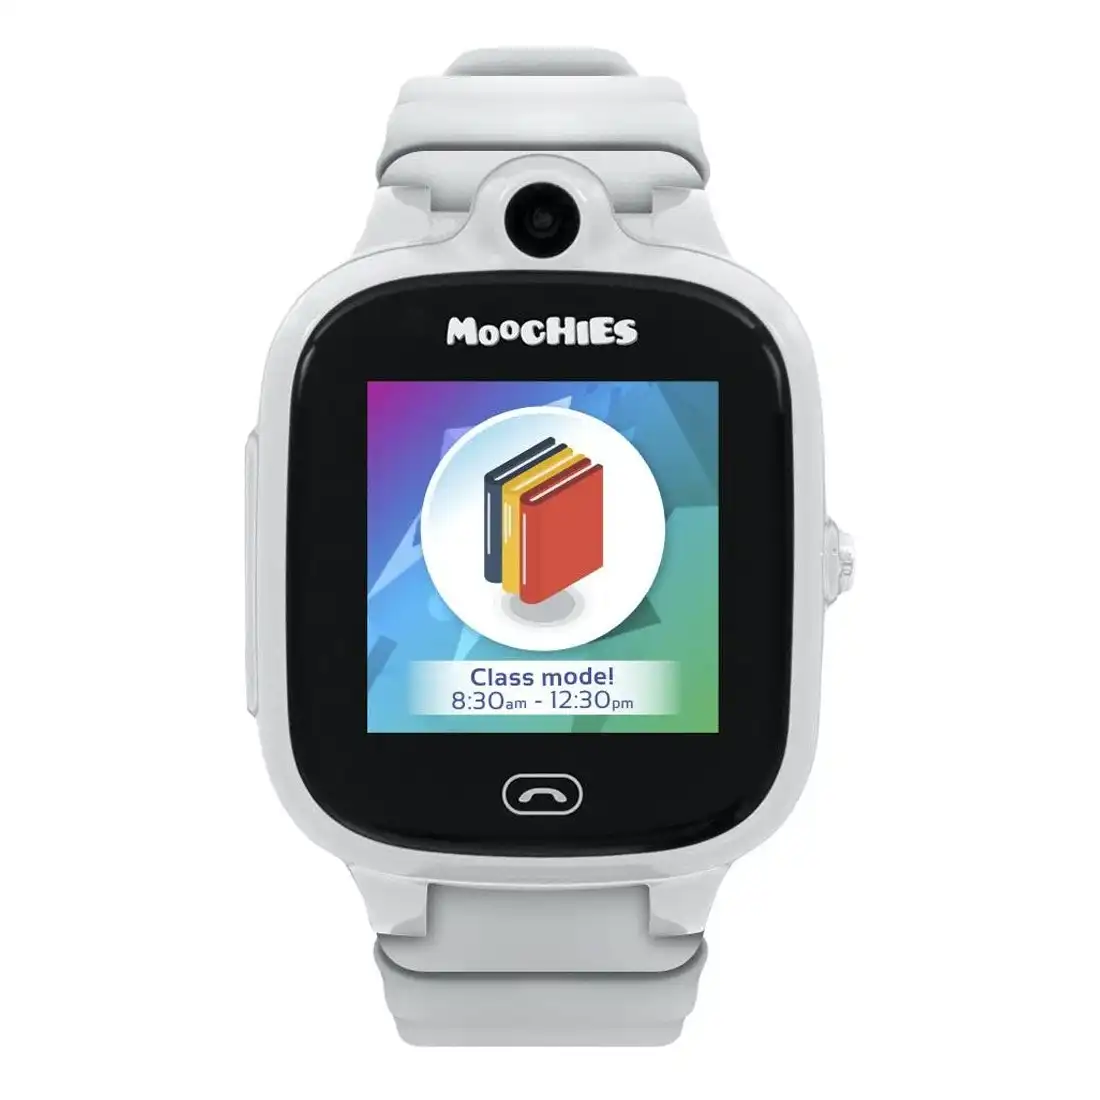 Moochies Smart Watch Phone for Kids 4G MW12WHT - White